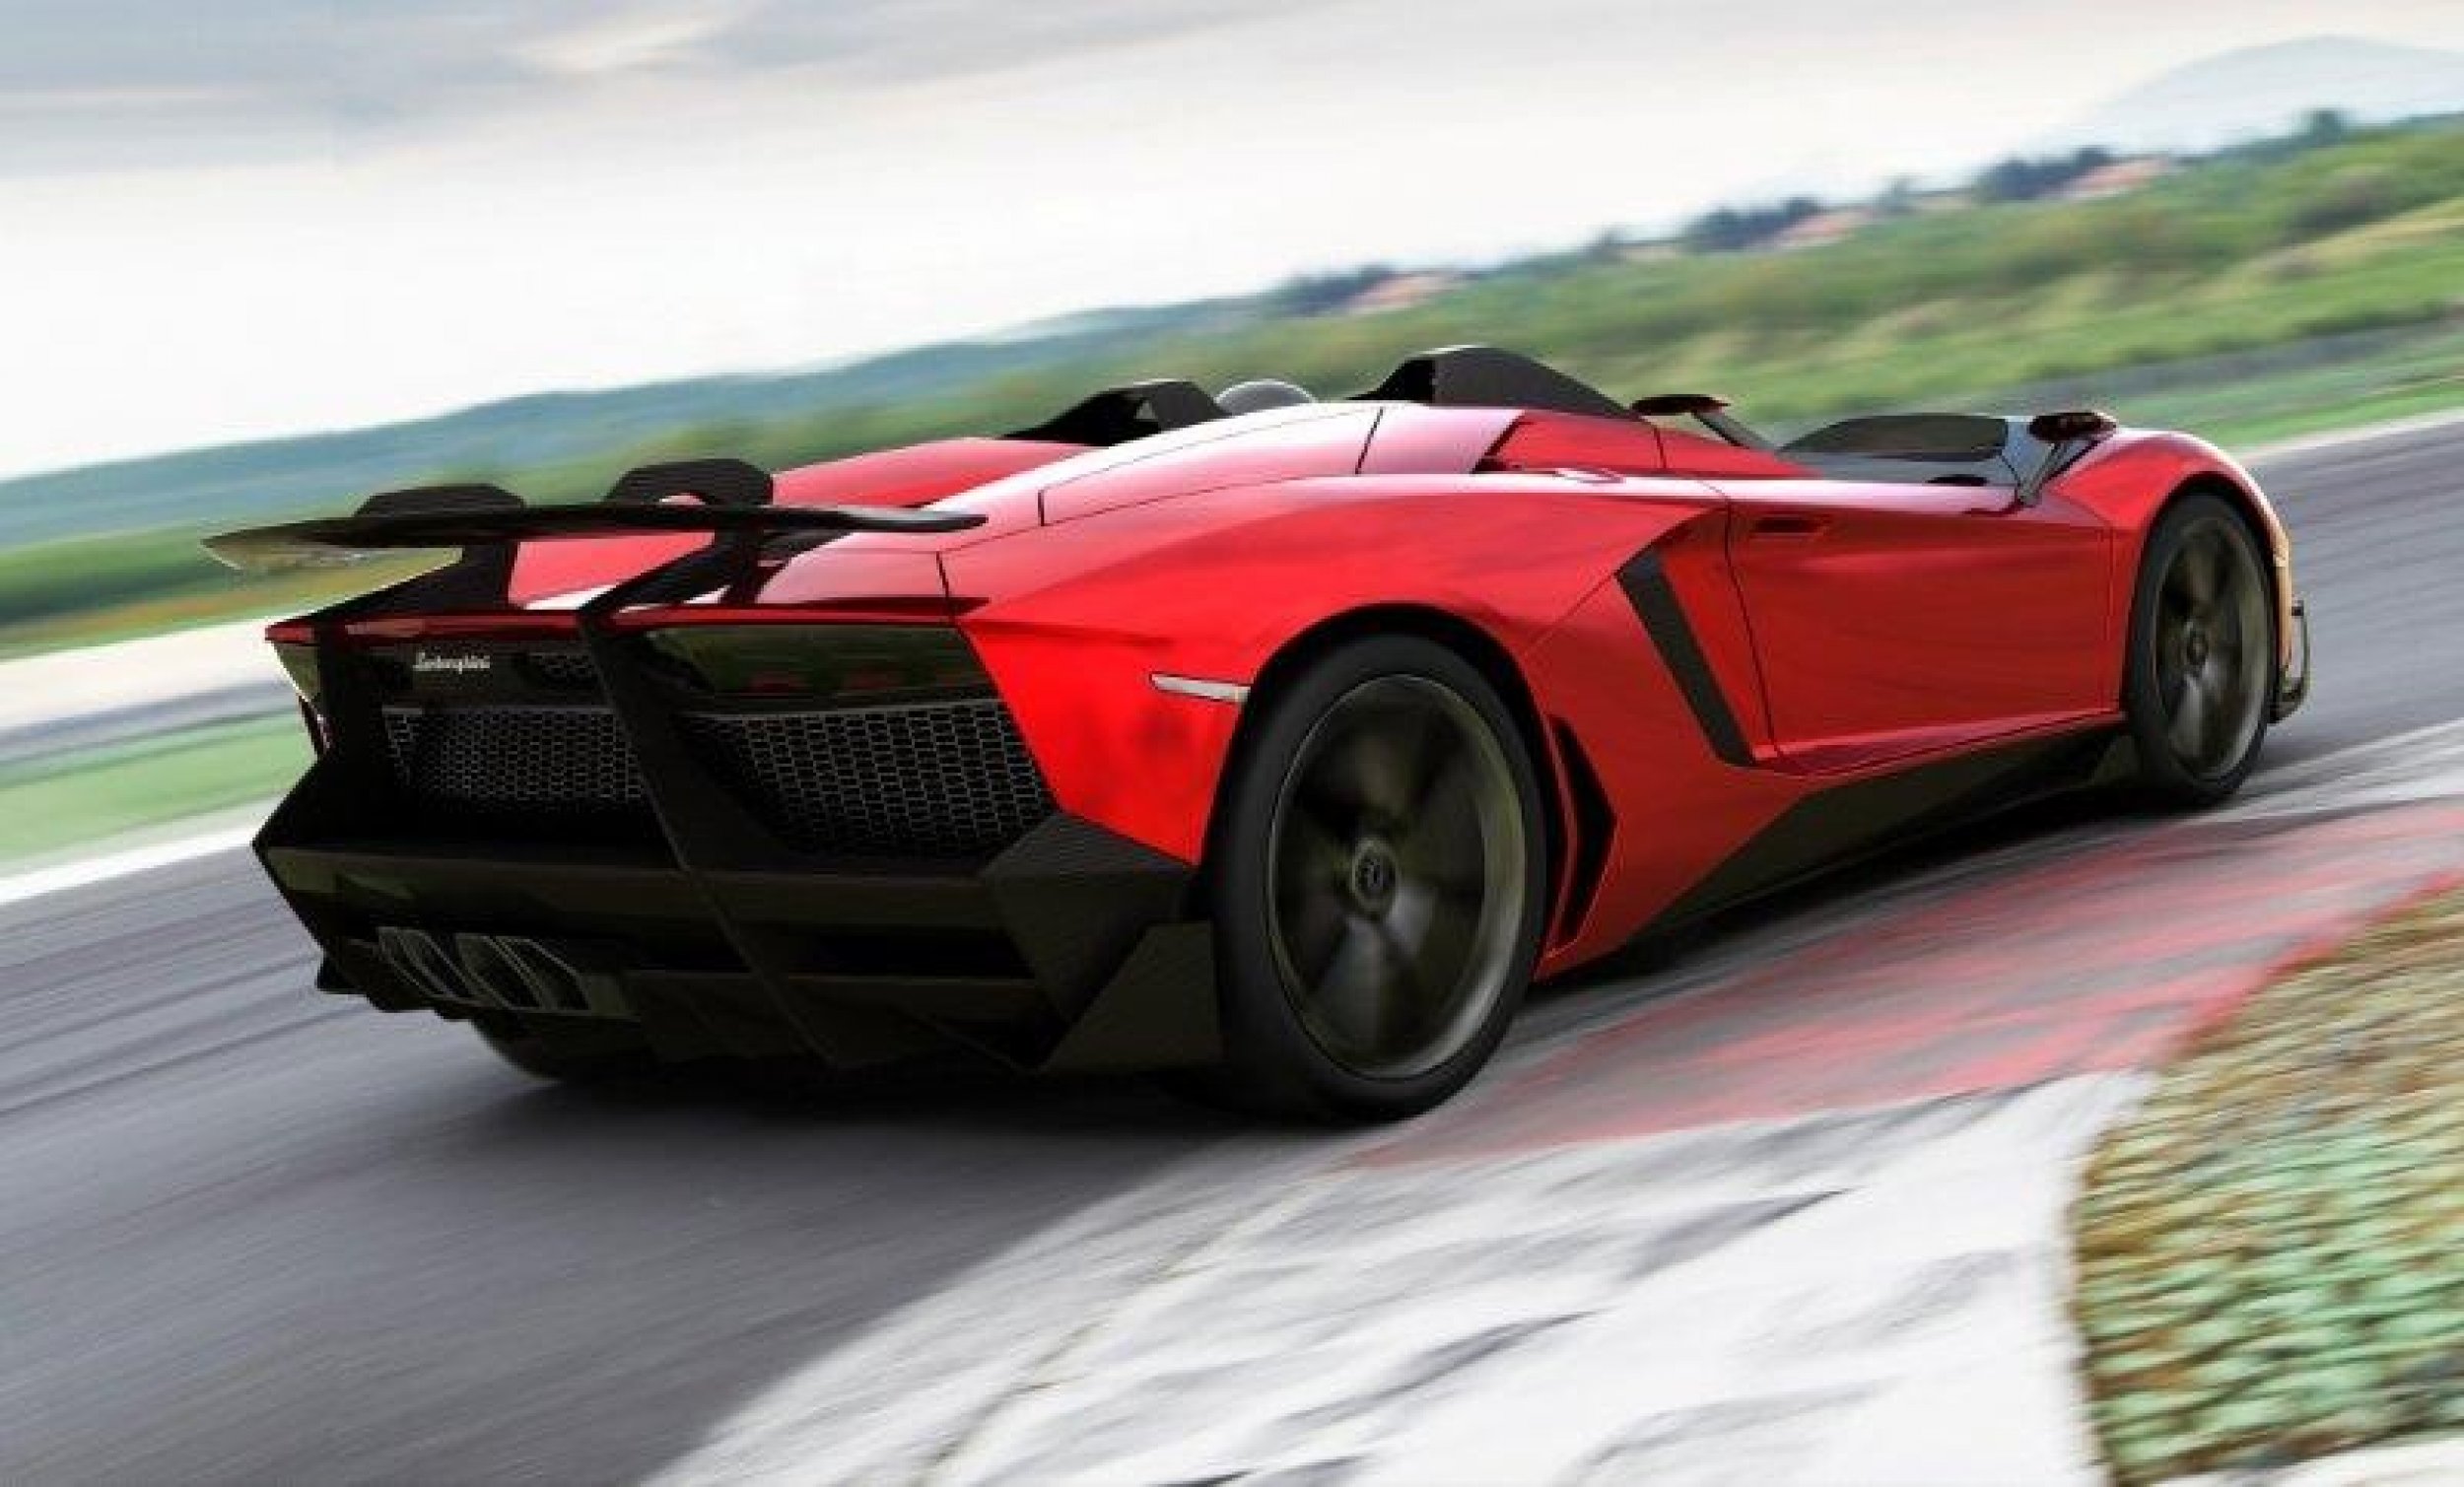 A Lamborghini Aventador J hits a chicane